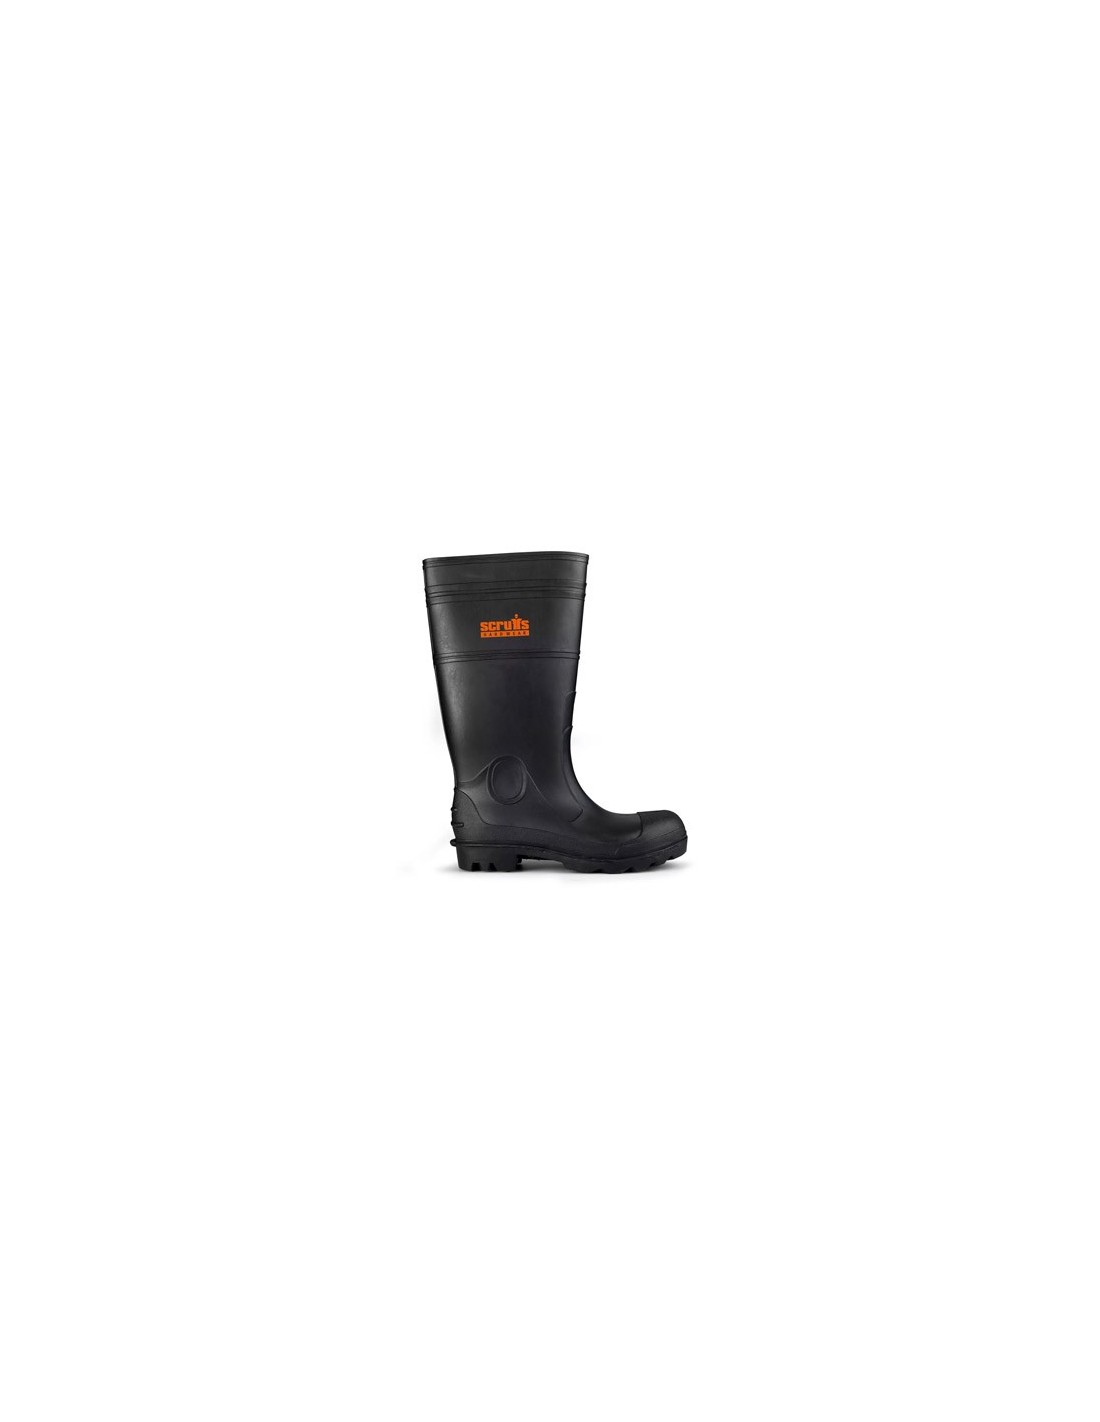 Scruffs Hayeswater Safety Waterproof Wellington Boots Black & Grey Sizes 7-12 